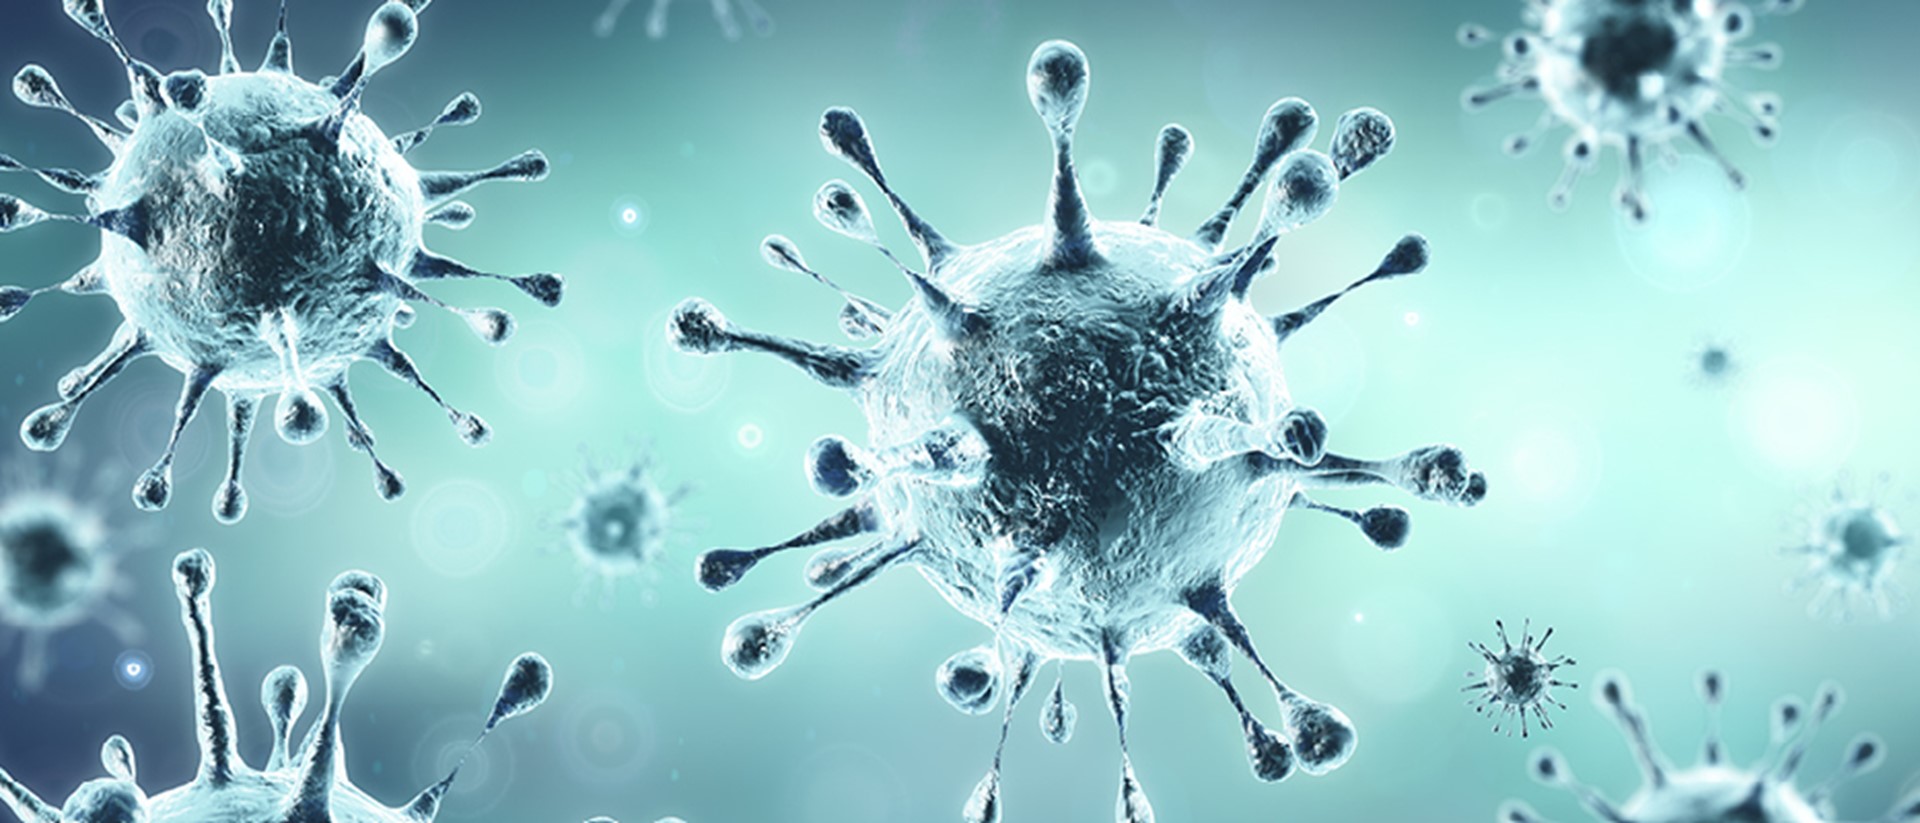 Image of blue viruses on a blue background